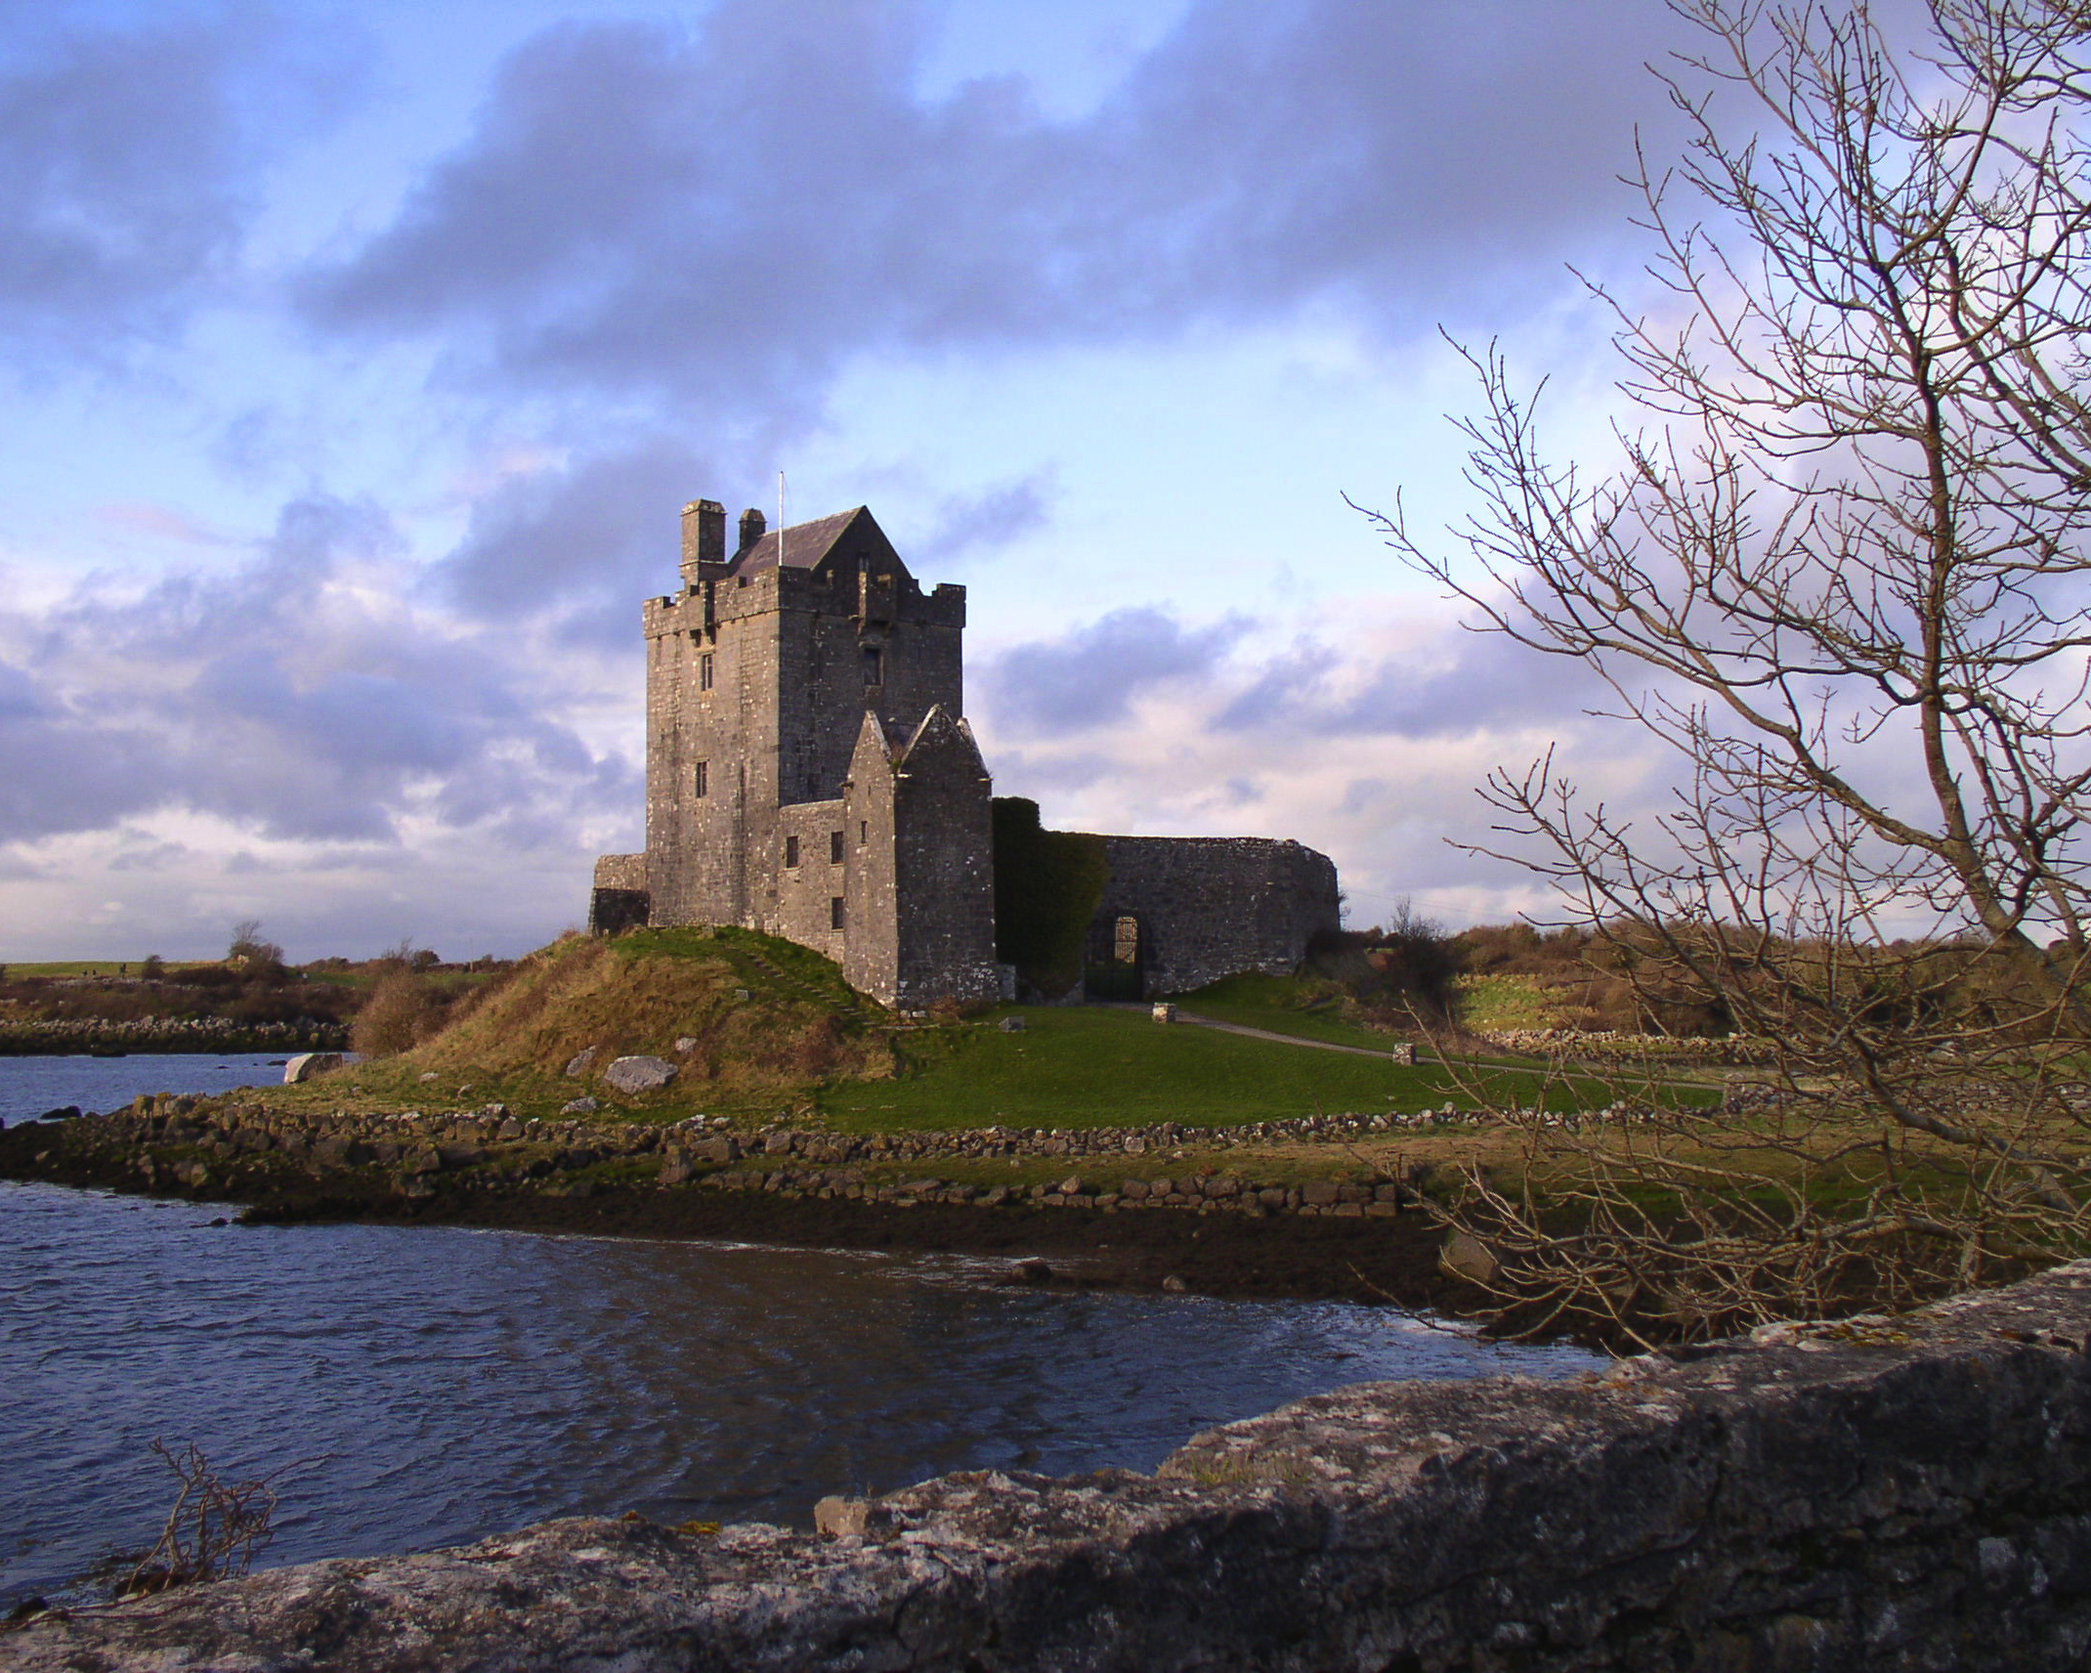 Old castle ruins in Ireland by gunnerf on DeviantArt